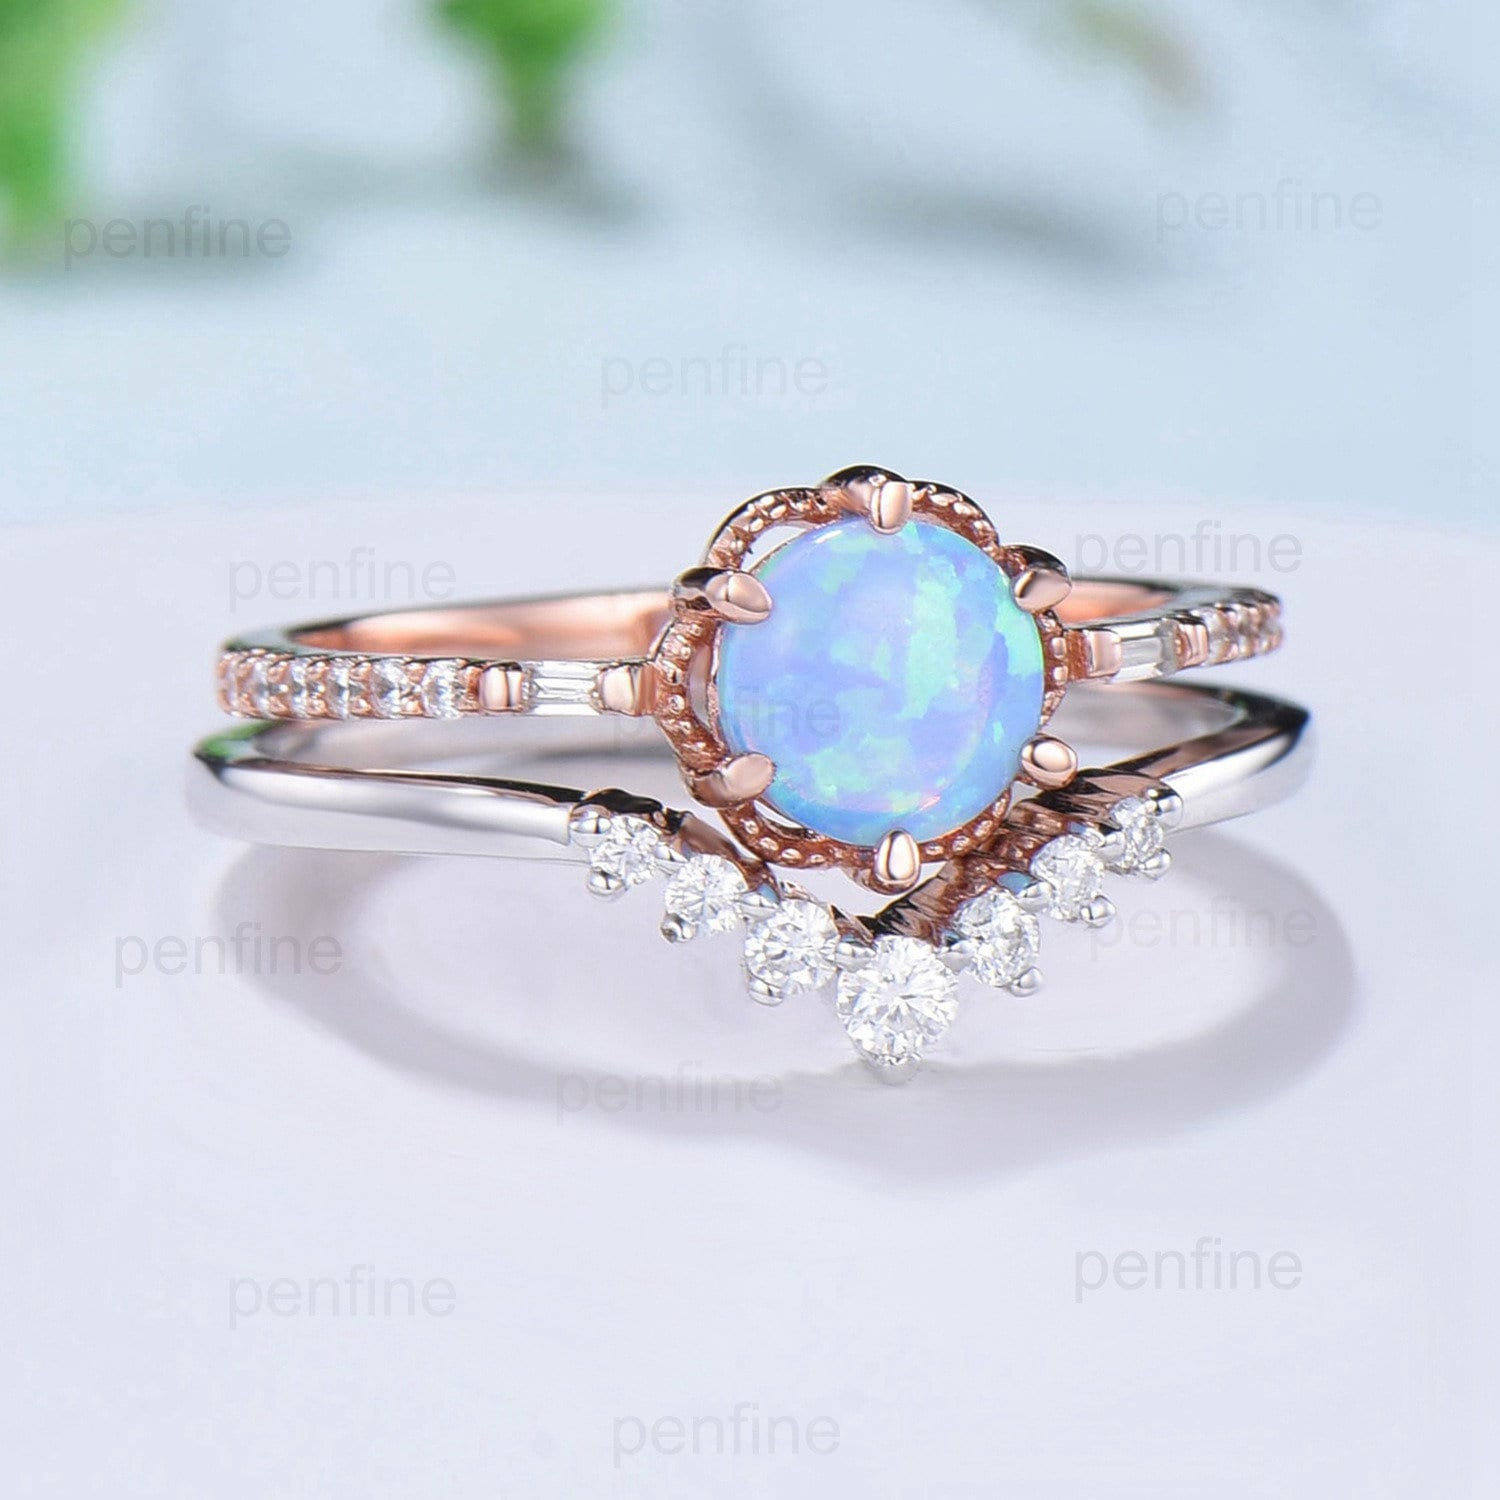 Vintage Round Blue Opal Ring Set Silver Rose Gold Black Opal Flower Moissanite Diamond Wedding Ring Unique Handmade Proposal Gifts for Women - PENFINE